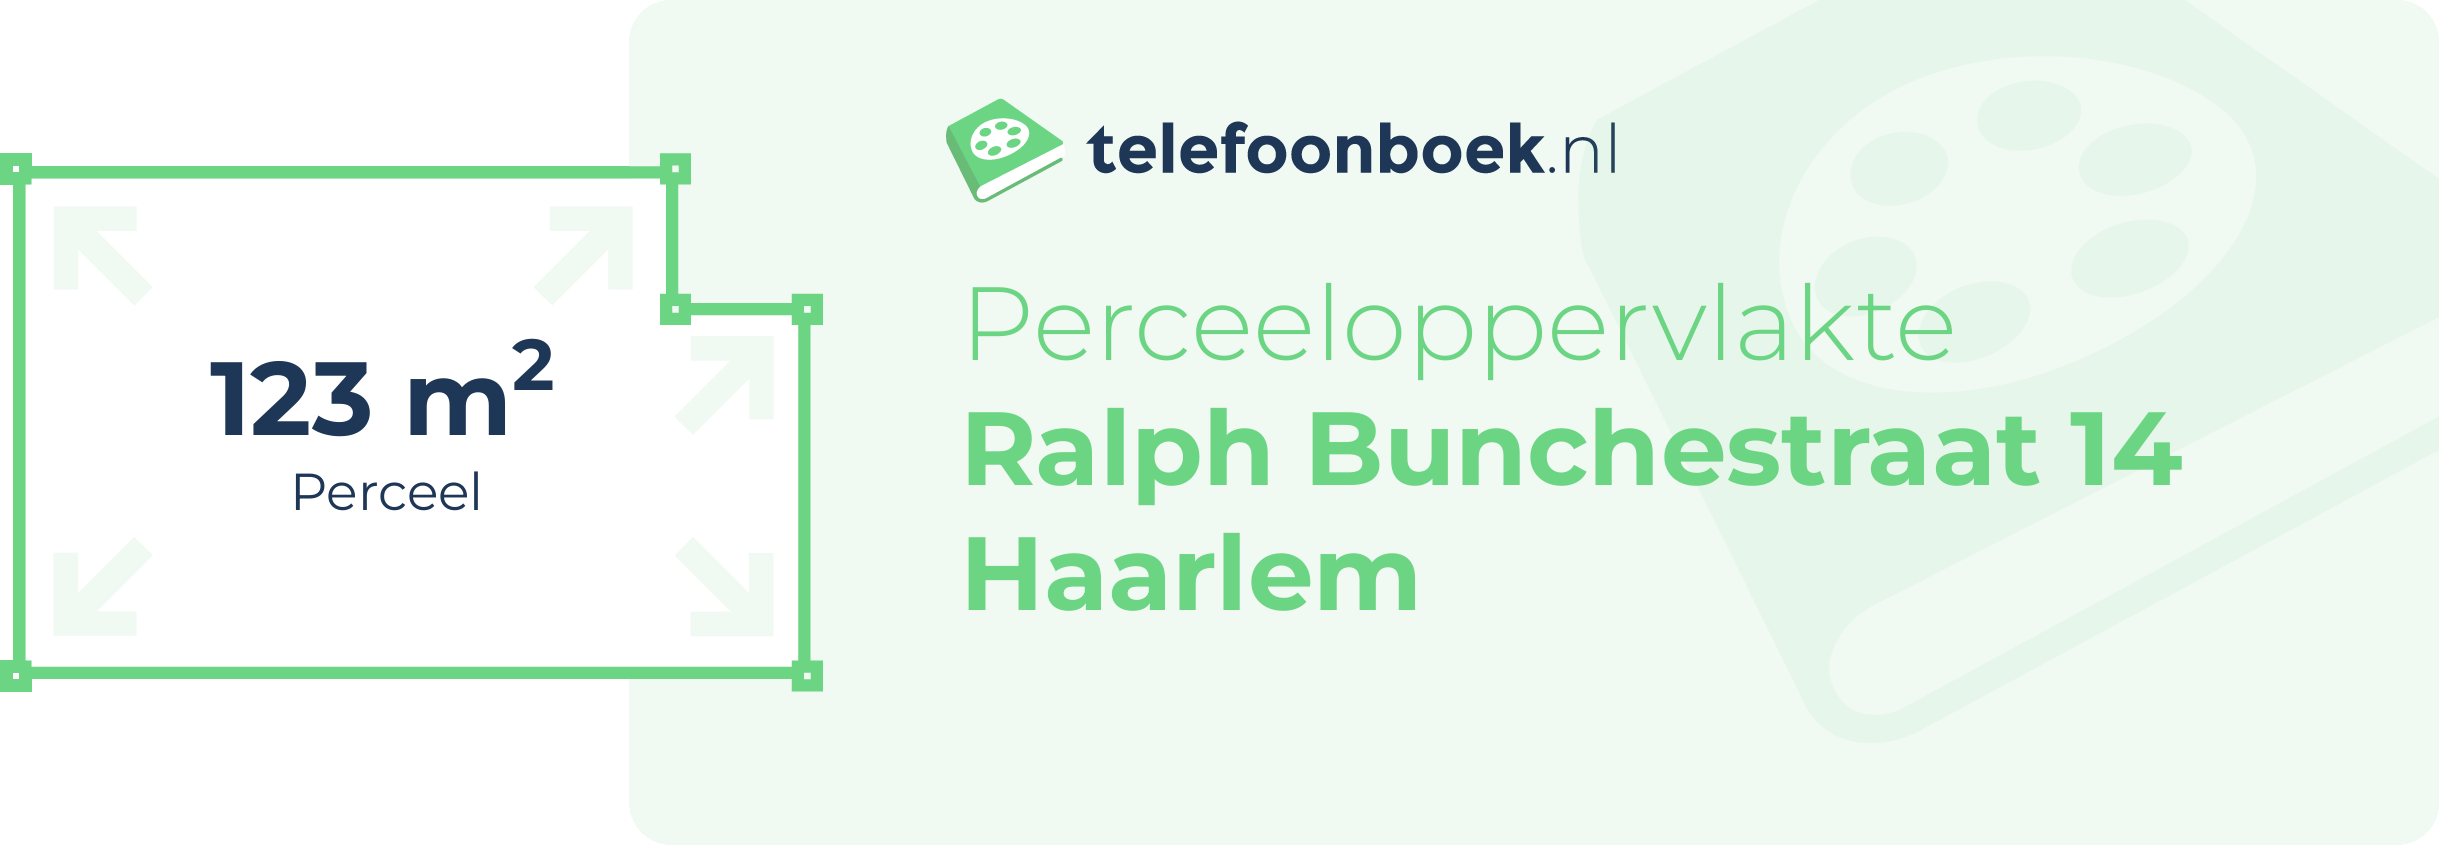 Perceeloppervlakte Ralph Bunchestraat 14 Haarlem